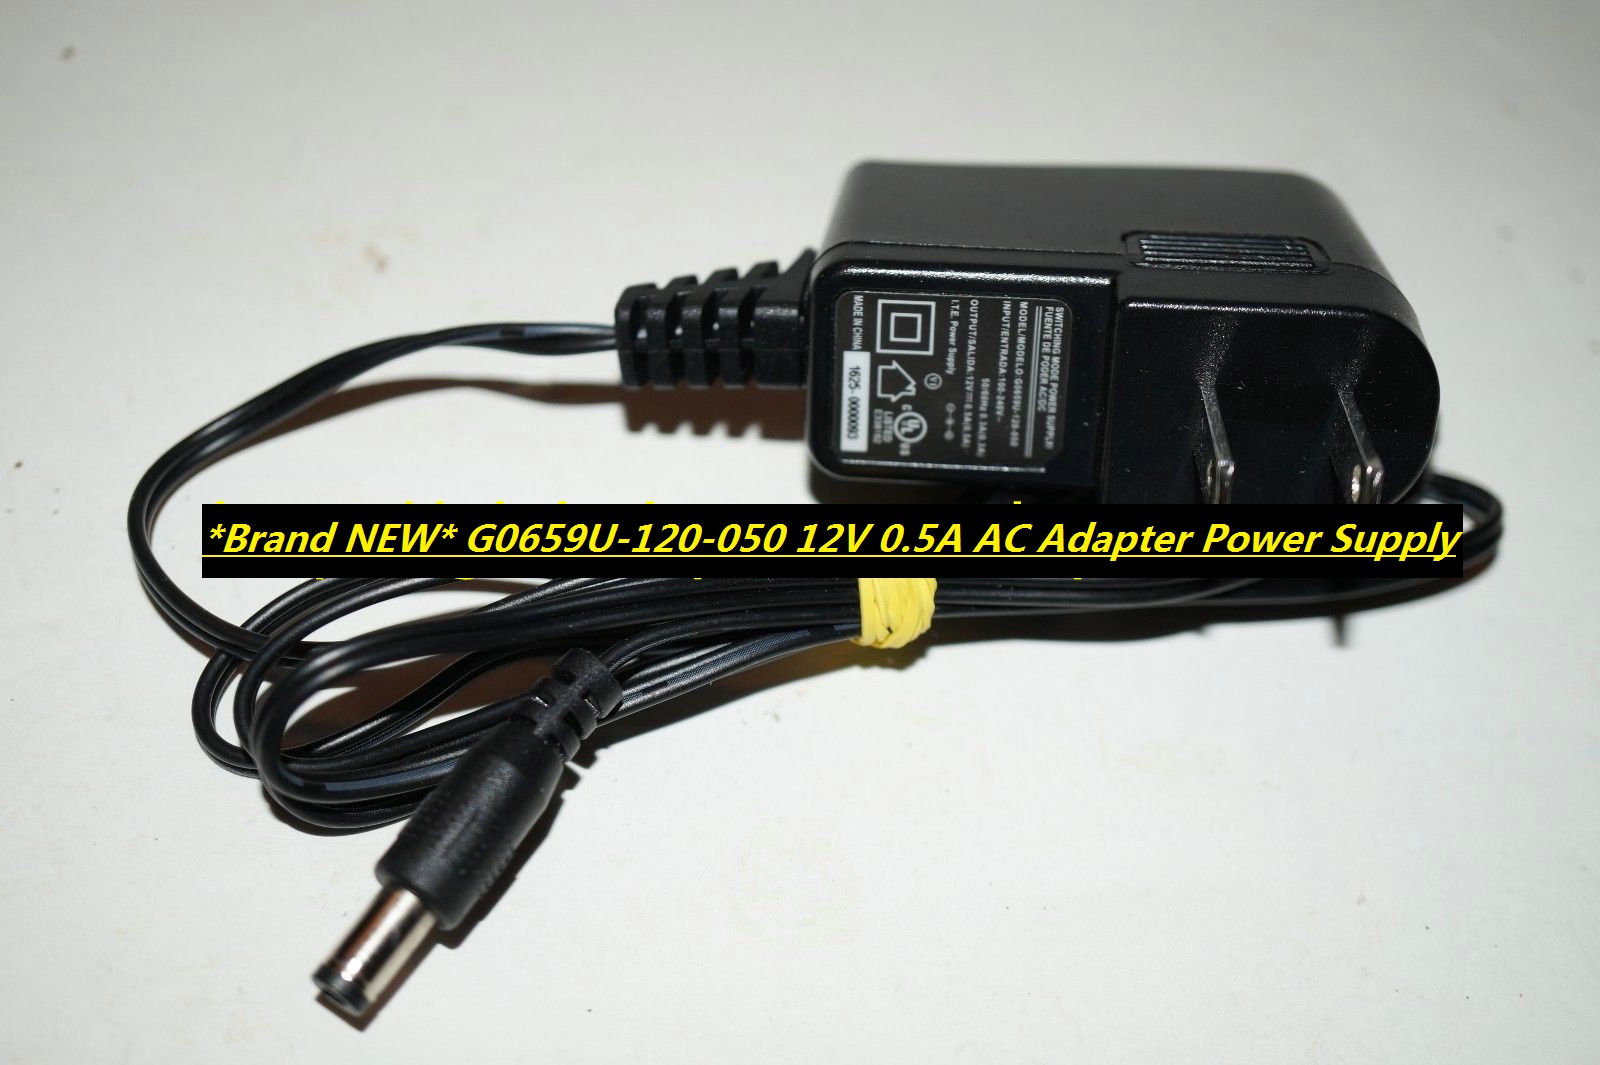 *Brand NEW* G0659U-120-050 12V 0.5A AC Adapter Power Supply